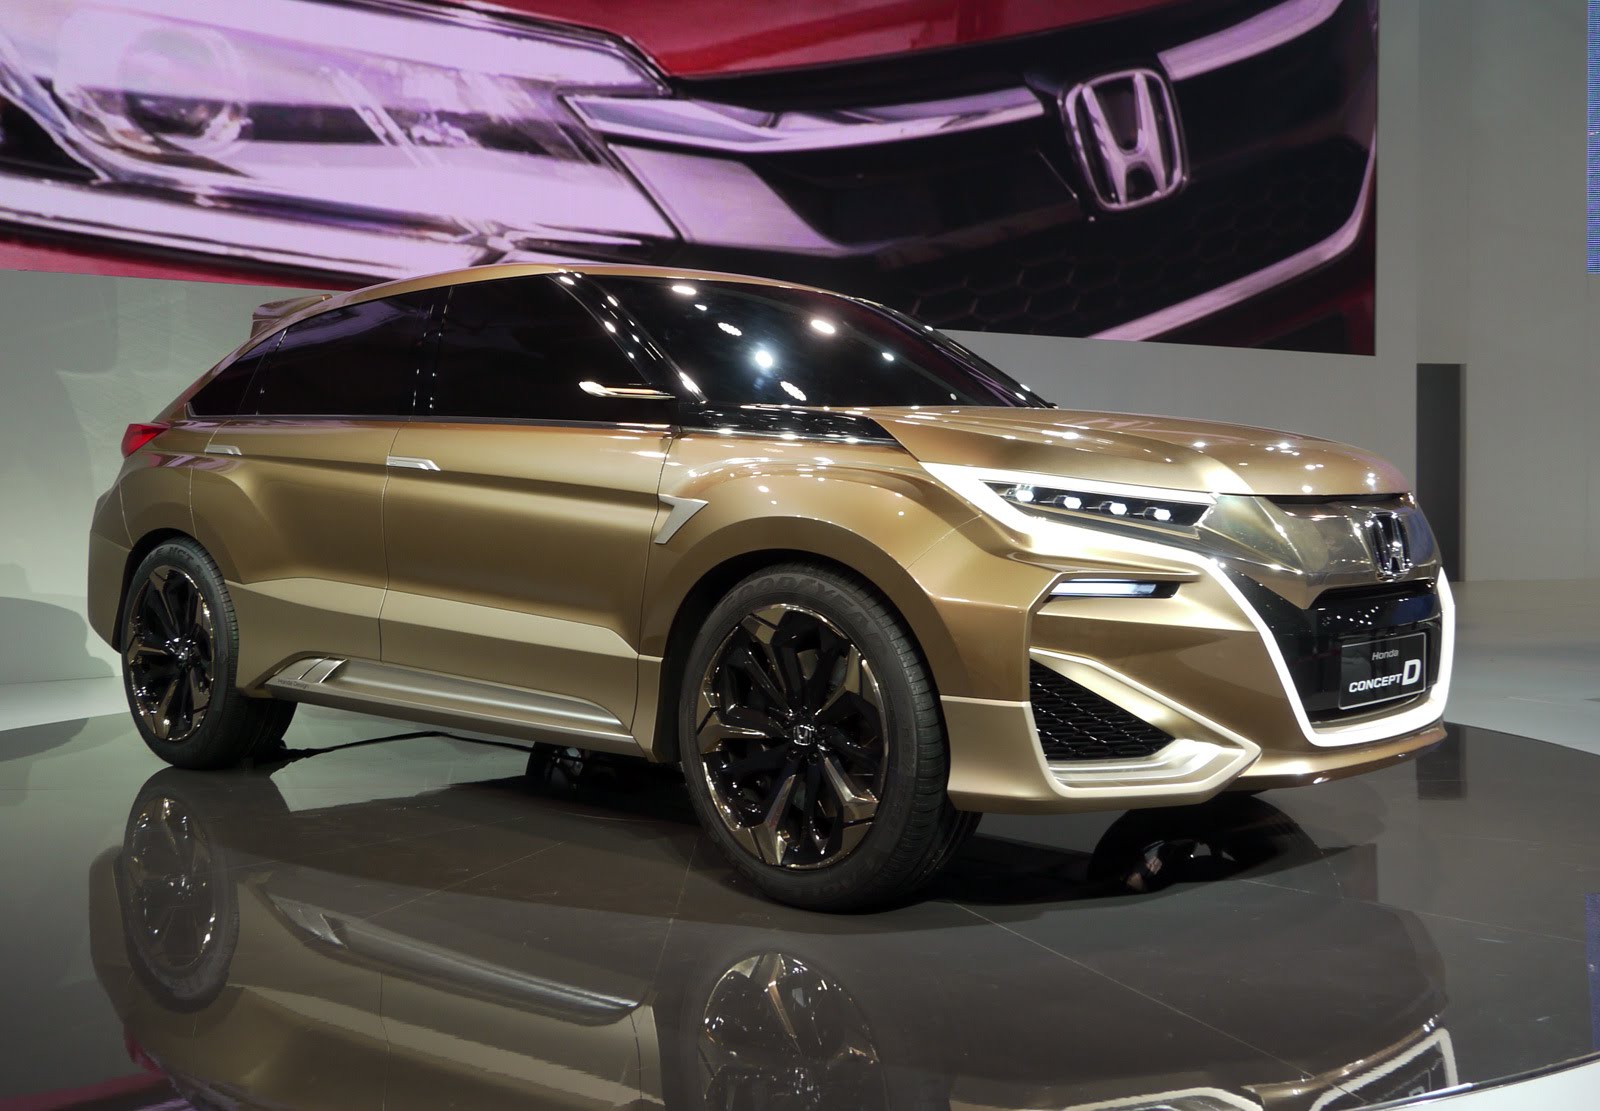 Honda Concept D Backgrounds on Wallpapers Vista